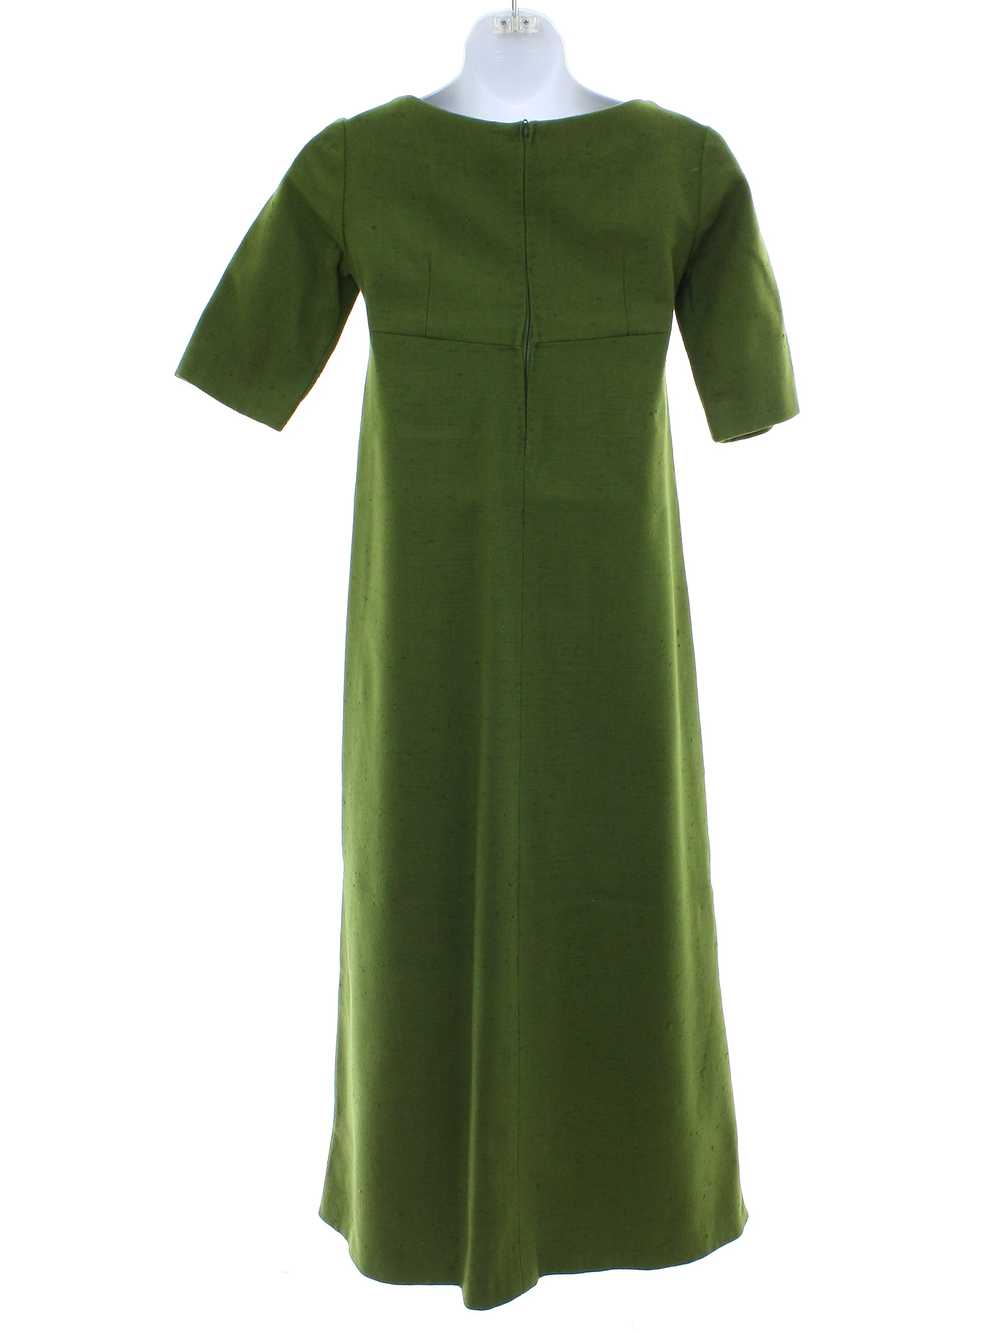 1960's A-line Mod Dress - image 3